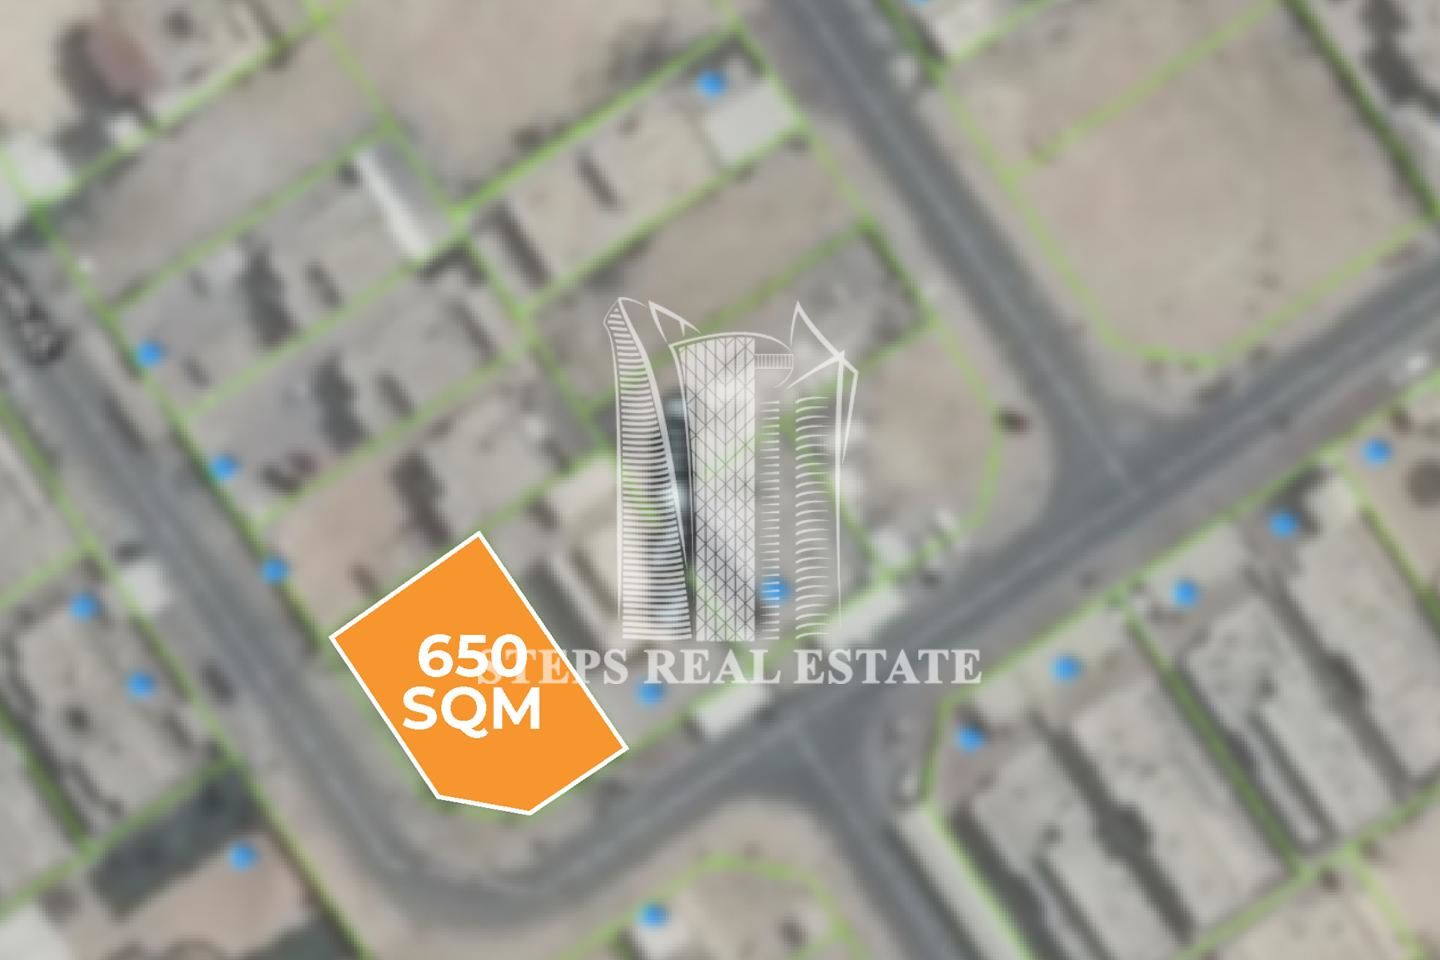 650 SQM Residential Land